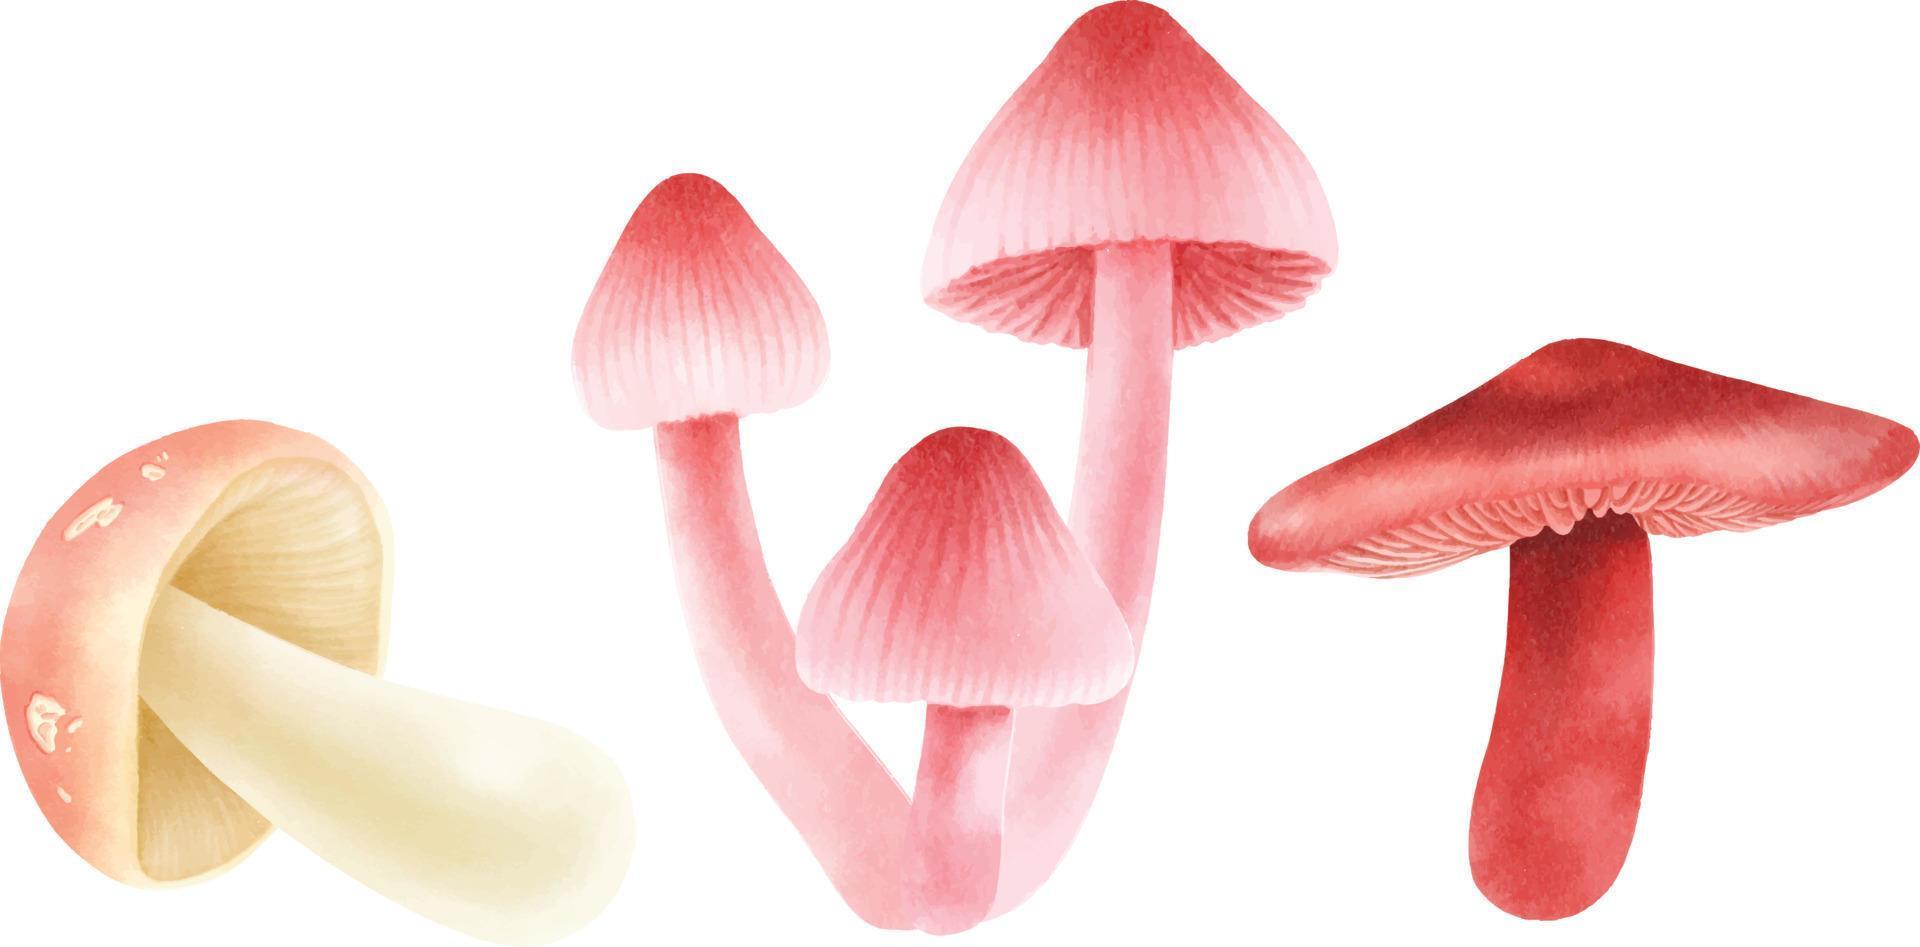 Set of  Mushroom illustration watercolor style vector